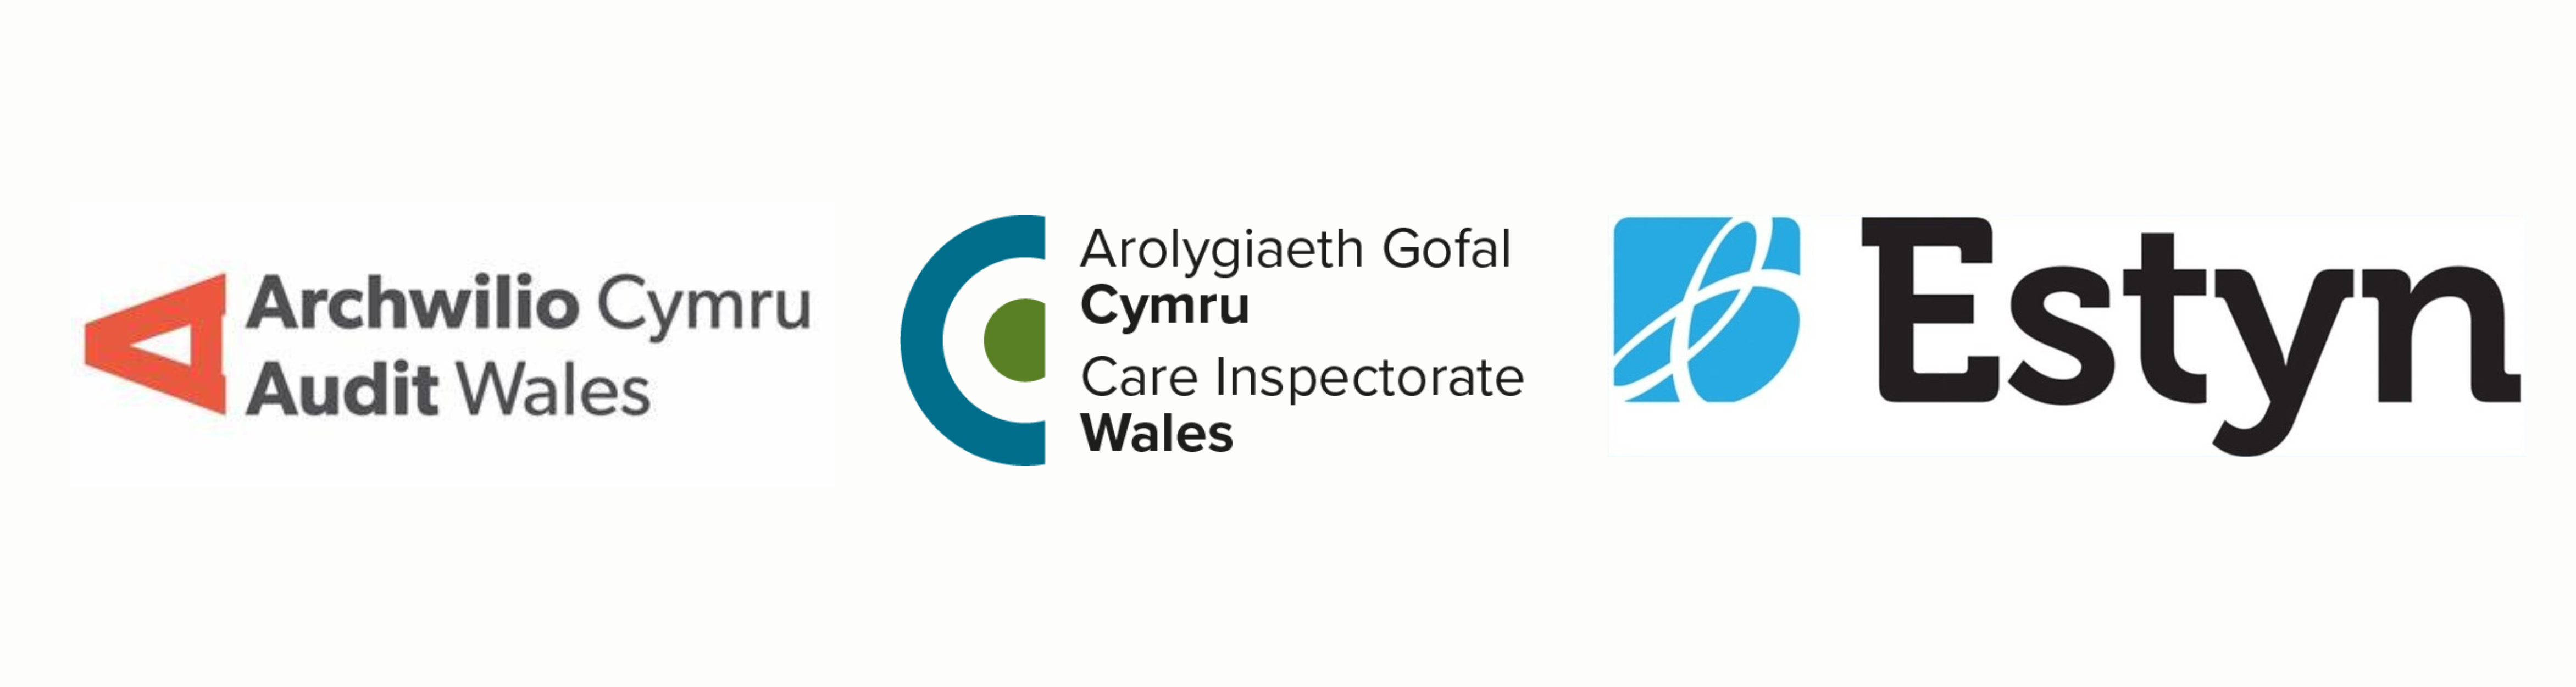 Audit Wales Care Inspectorate Wales Estyn